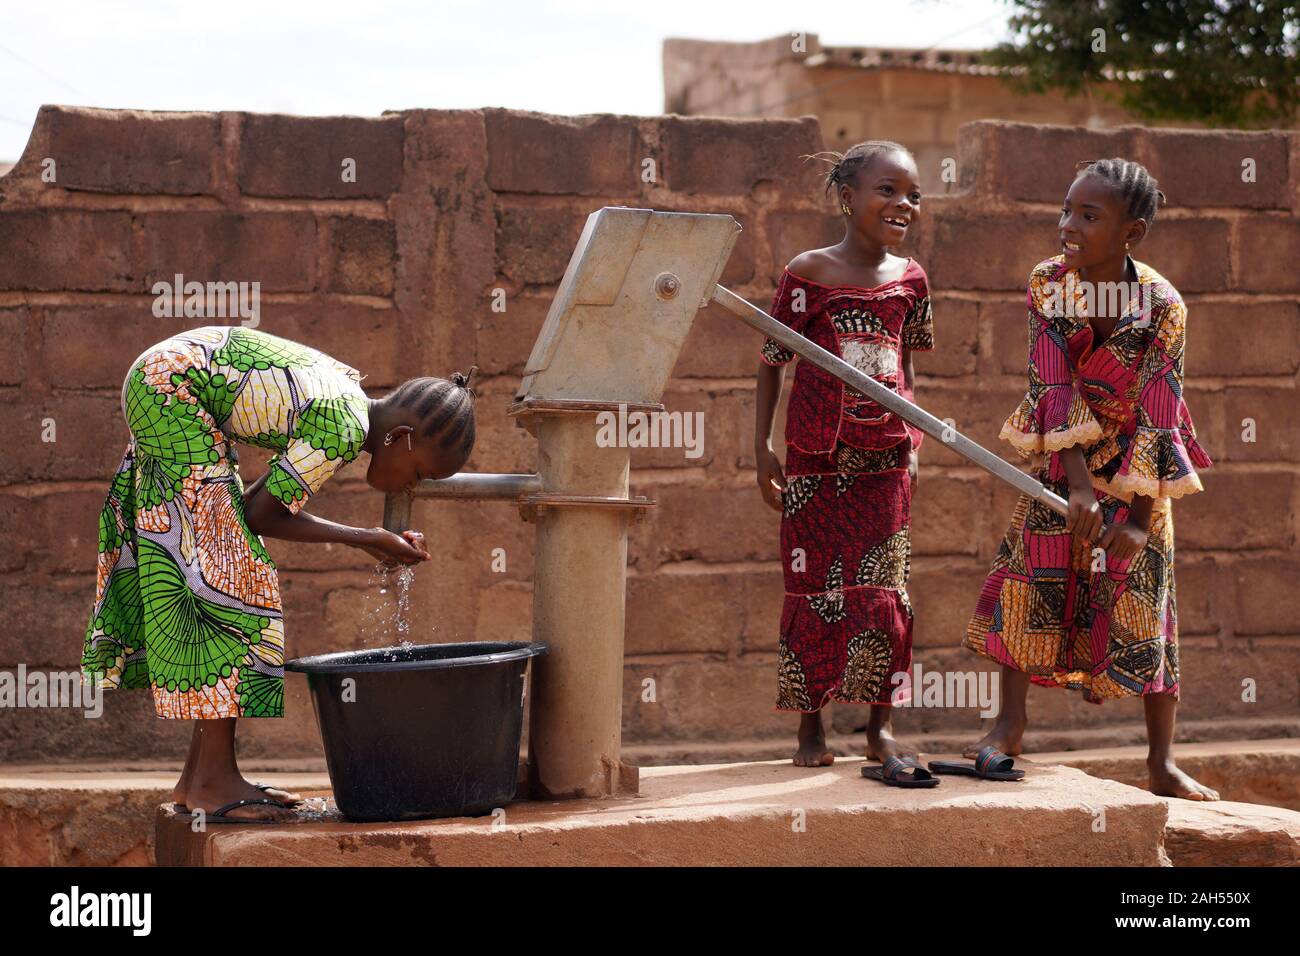 Ragazze Africane Occupate A Prendere Acqua Potabile Pulita E Fresca Foto Stock